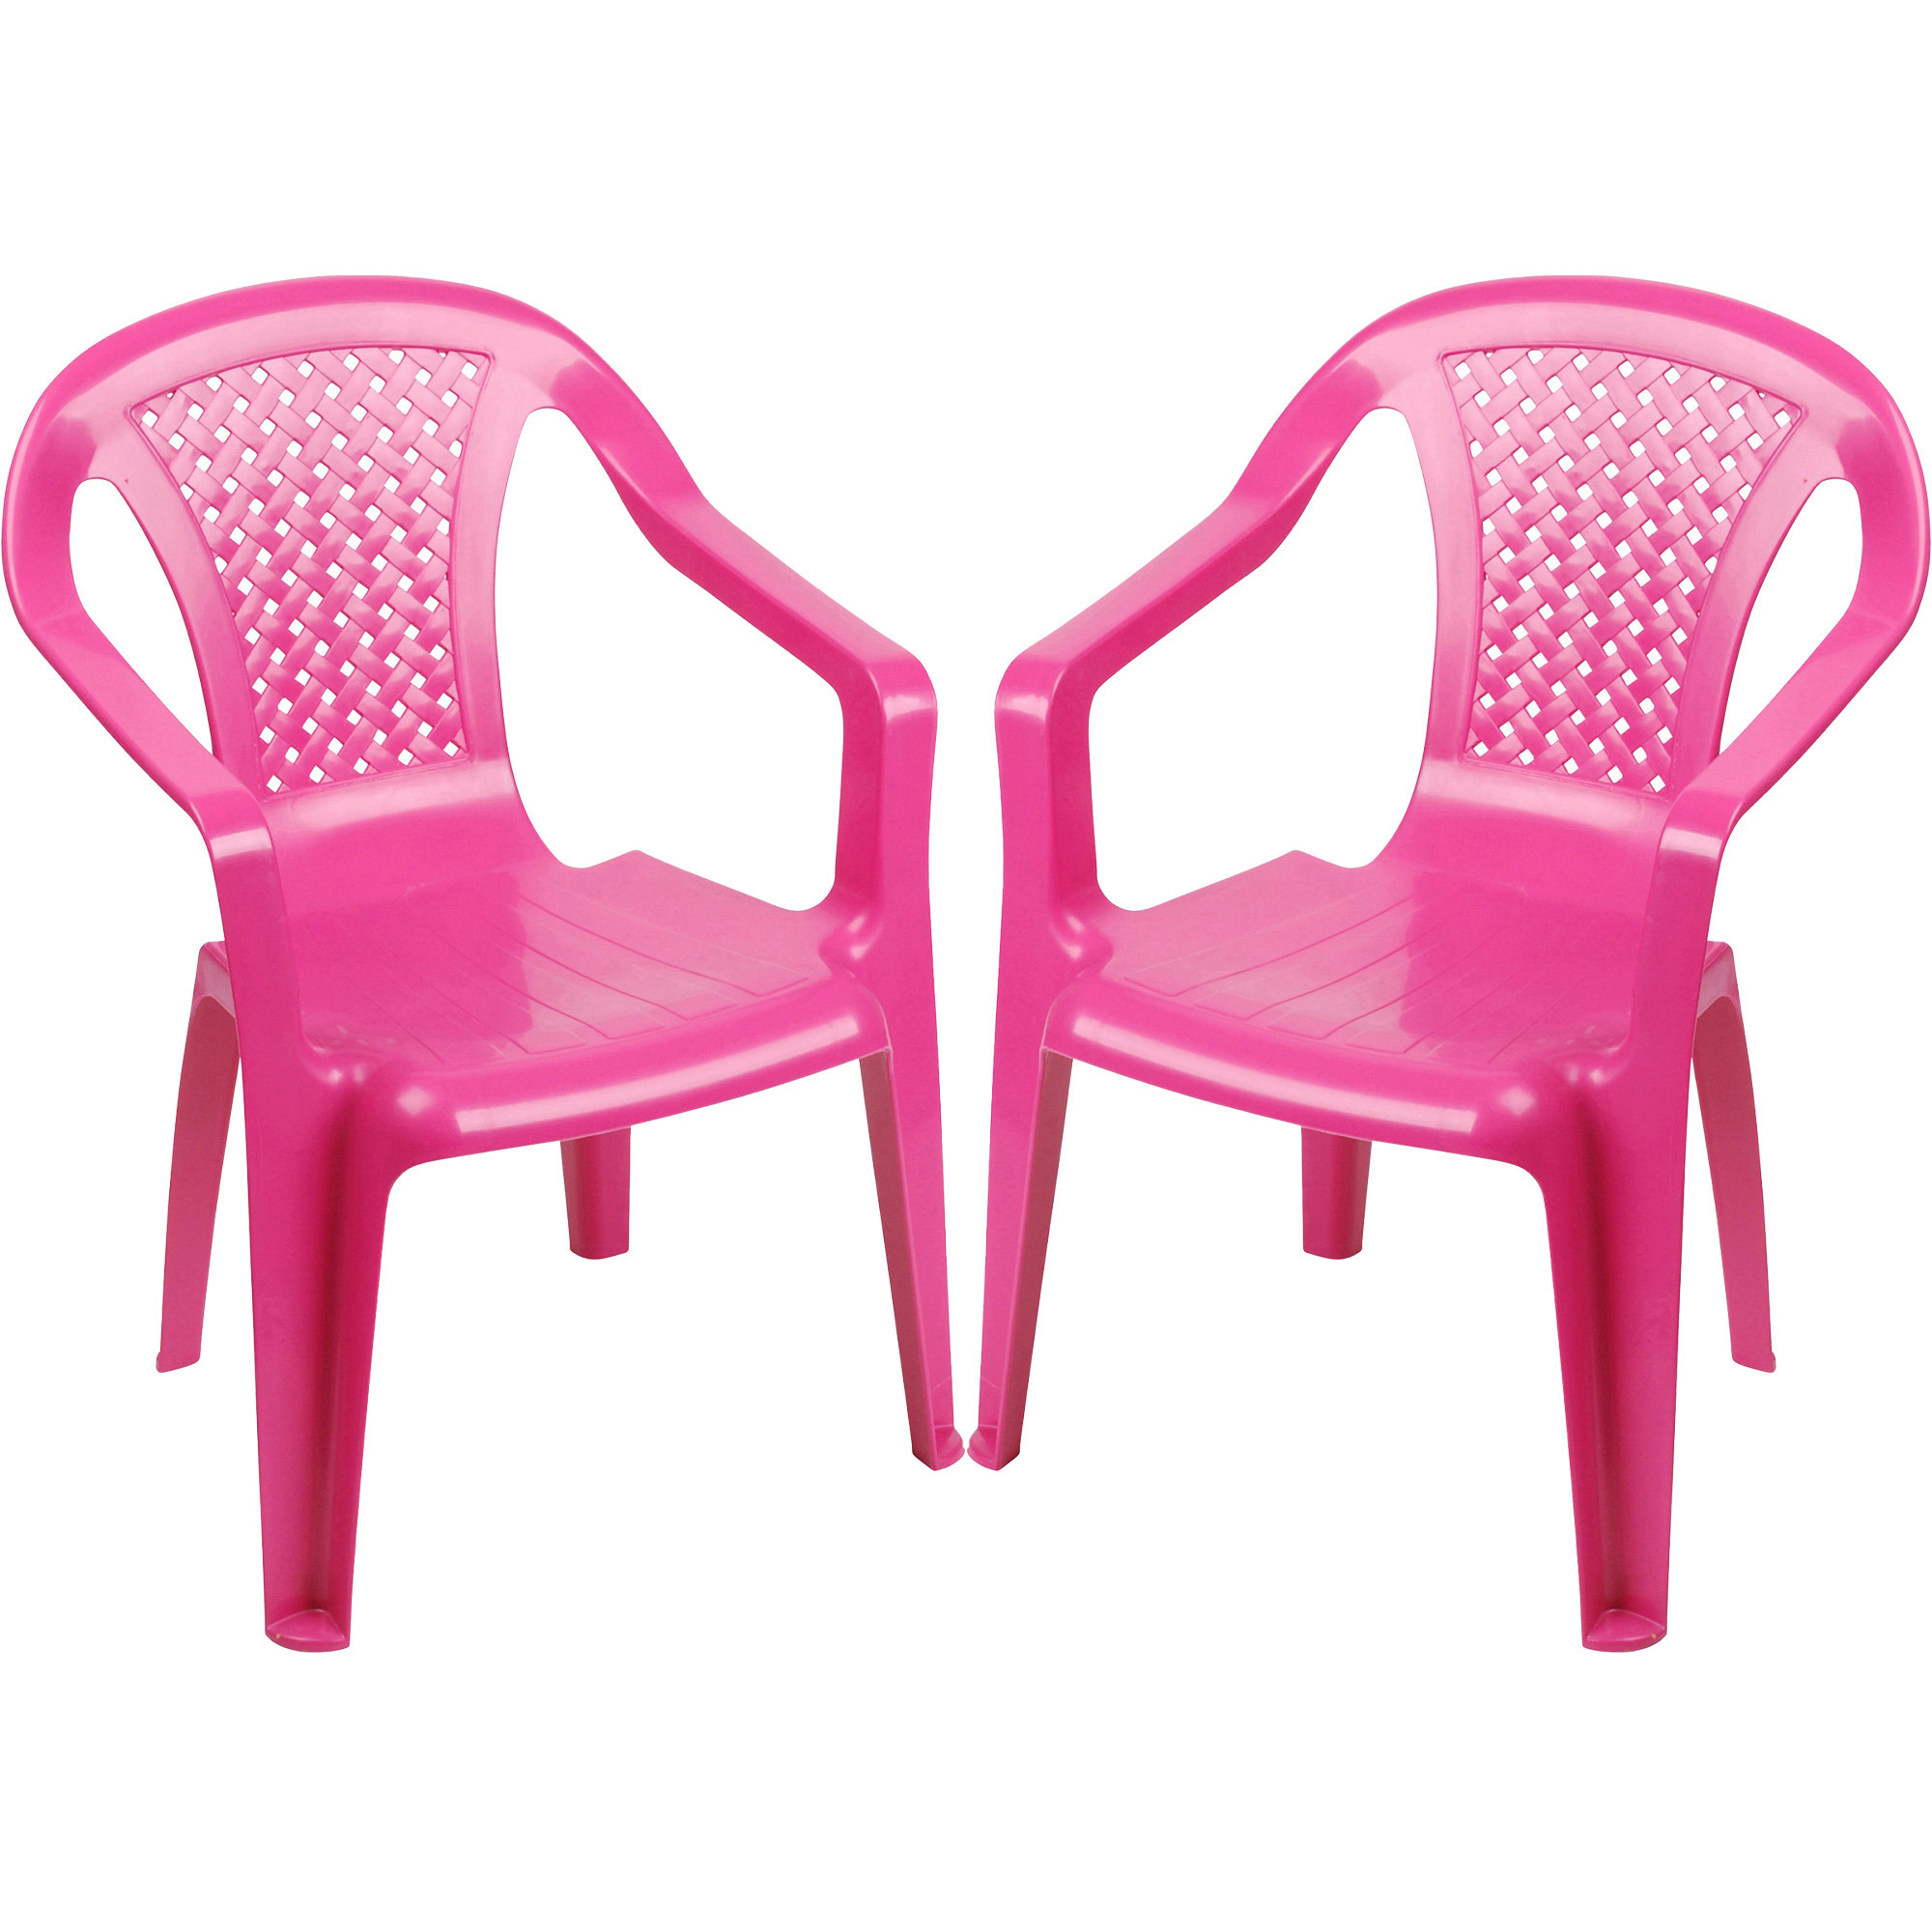 Sunnydays Kinderstoel - 2x - roze - kunststof - buiten/binnen - L37 x B35 x H52 cm -